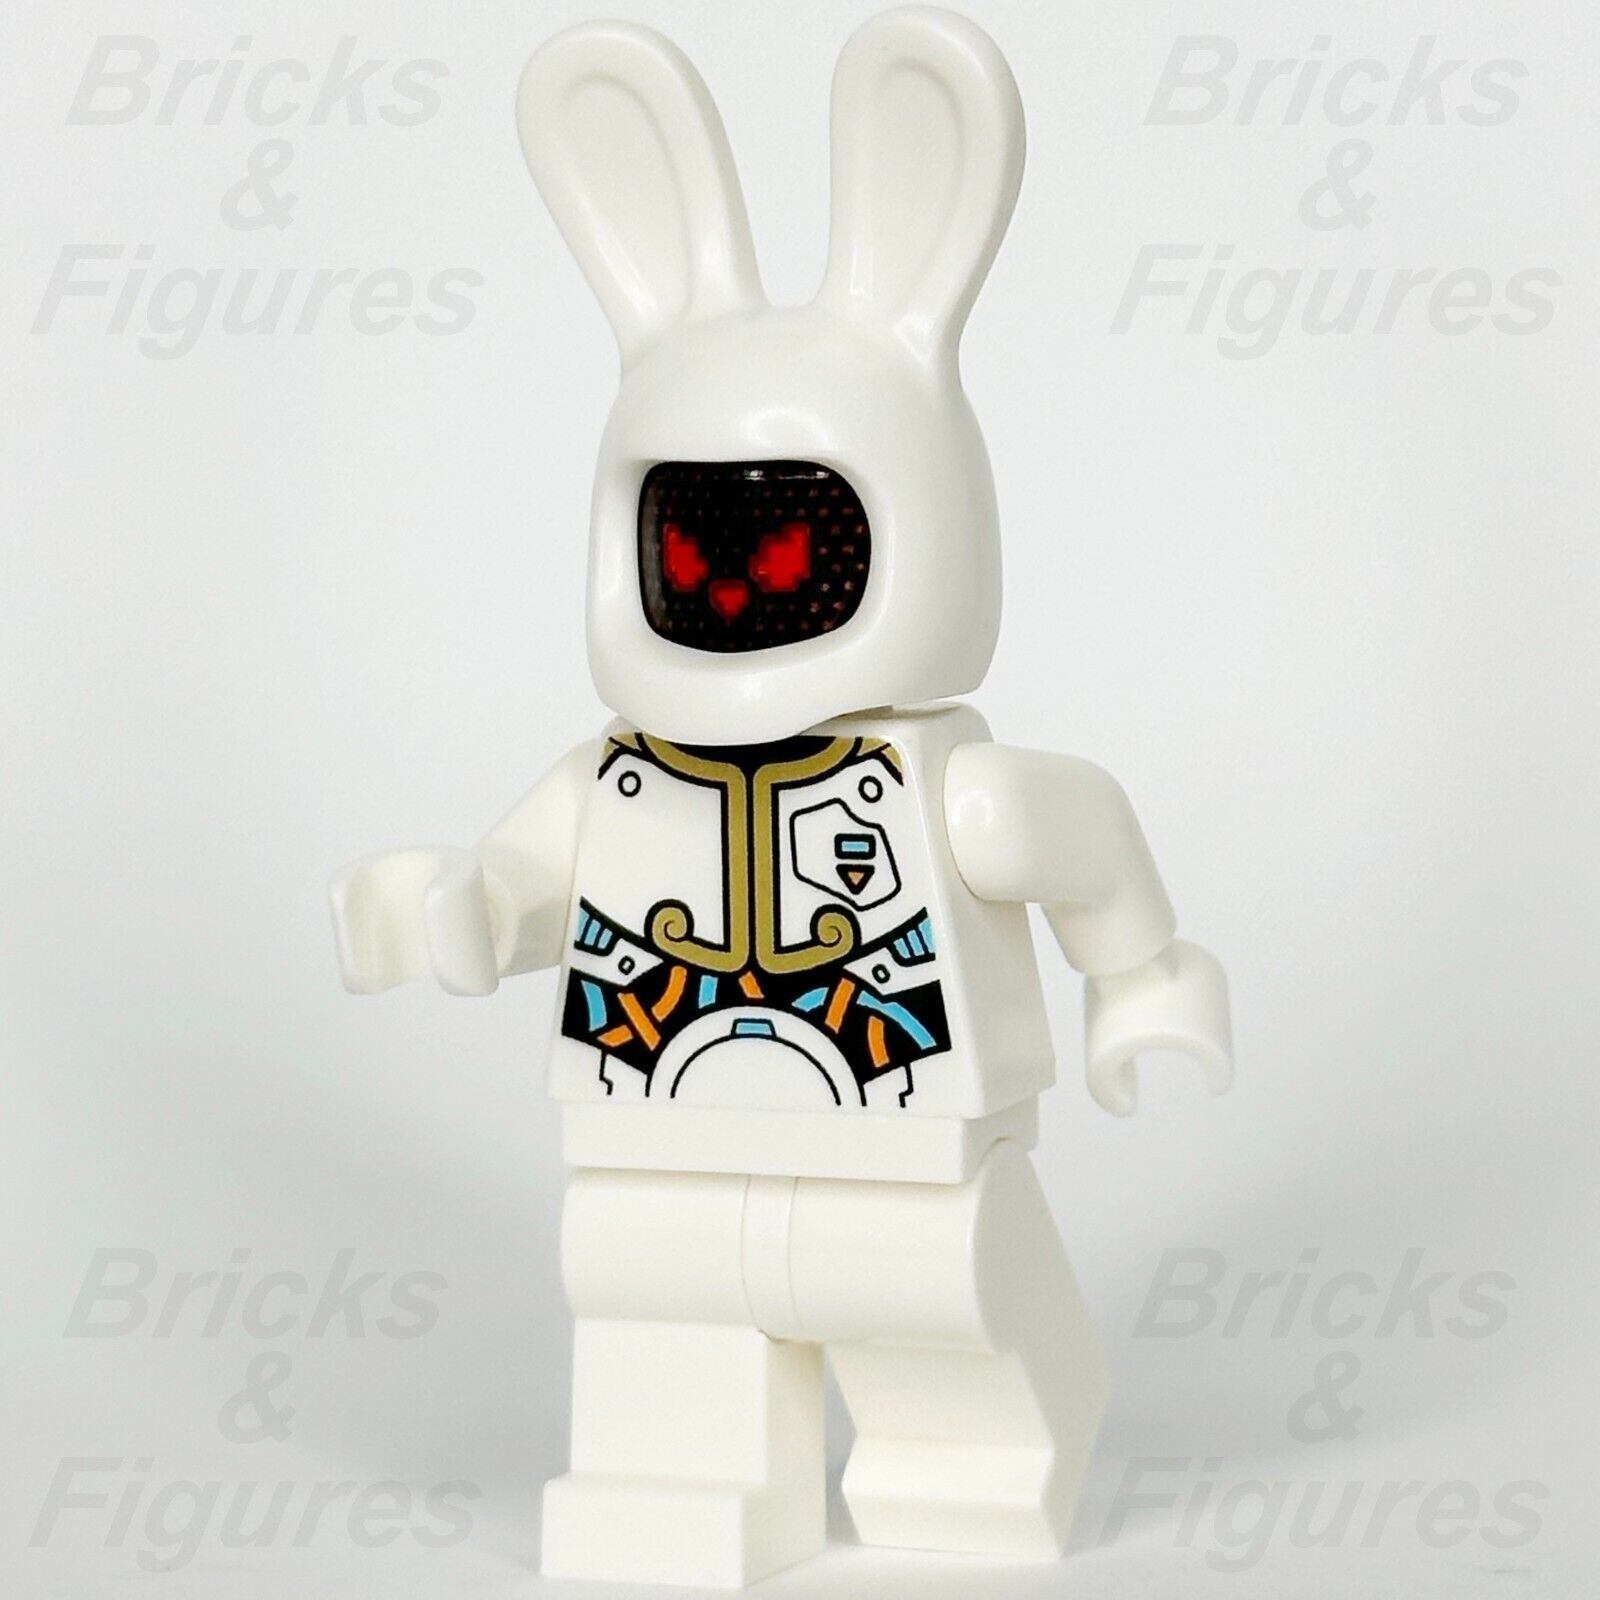 LEGO Monkie Kid Lunar Rabbit Robot Minifigure Evil Angry Happy Face 80032 mk081